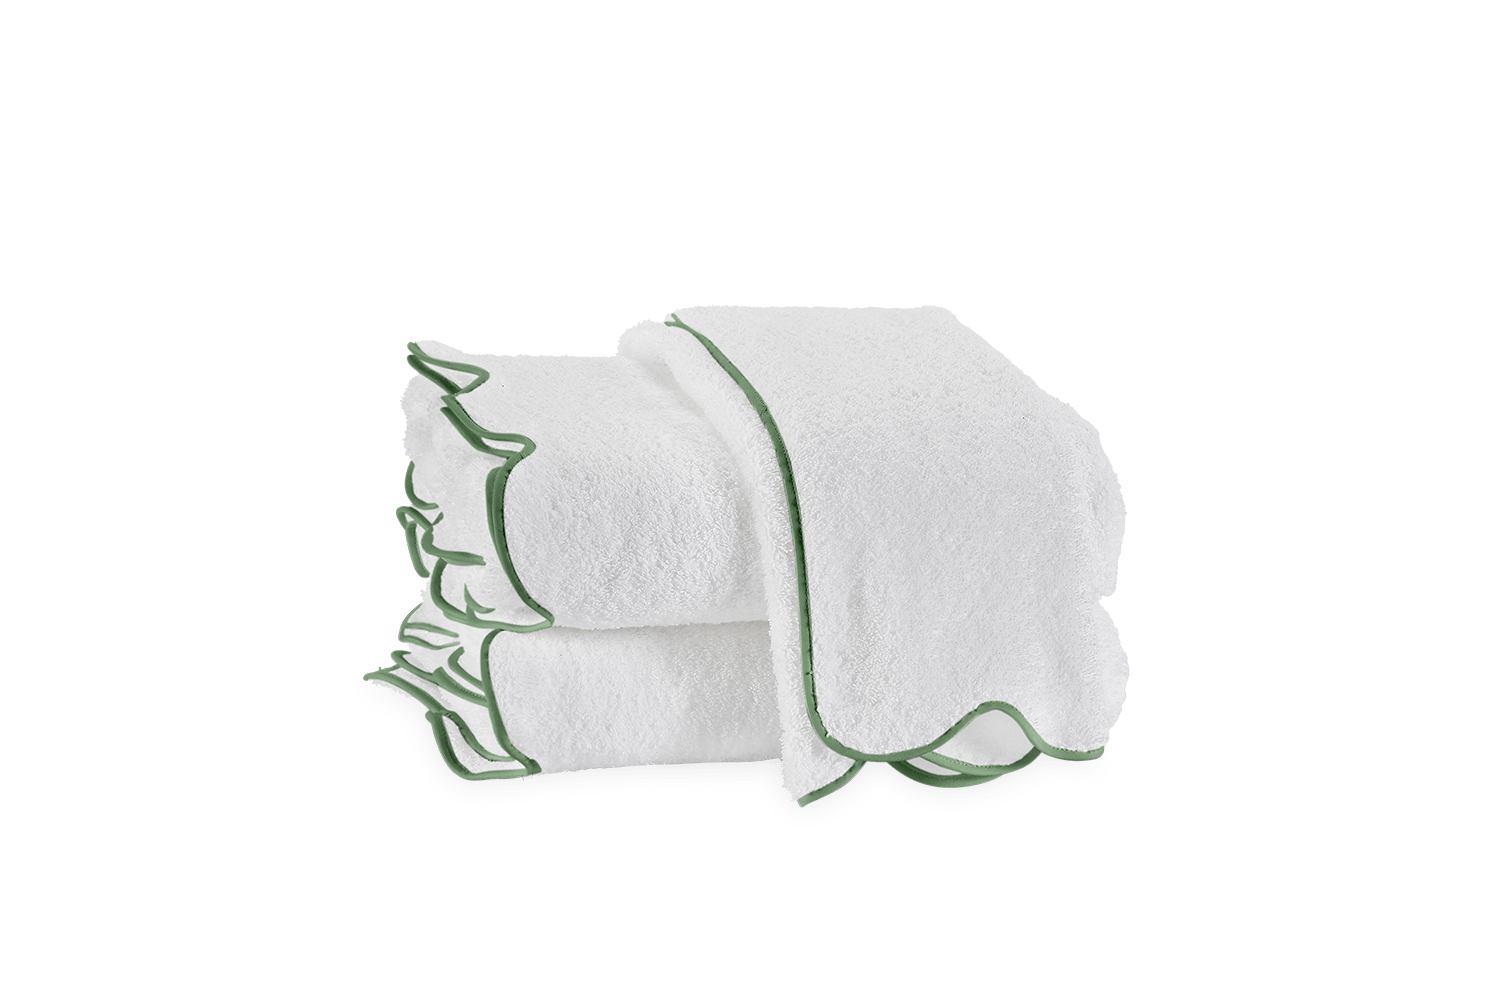 Matouk Cairo Scallop Towels